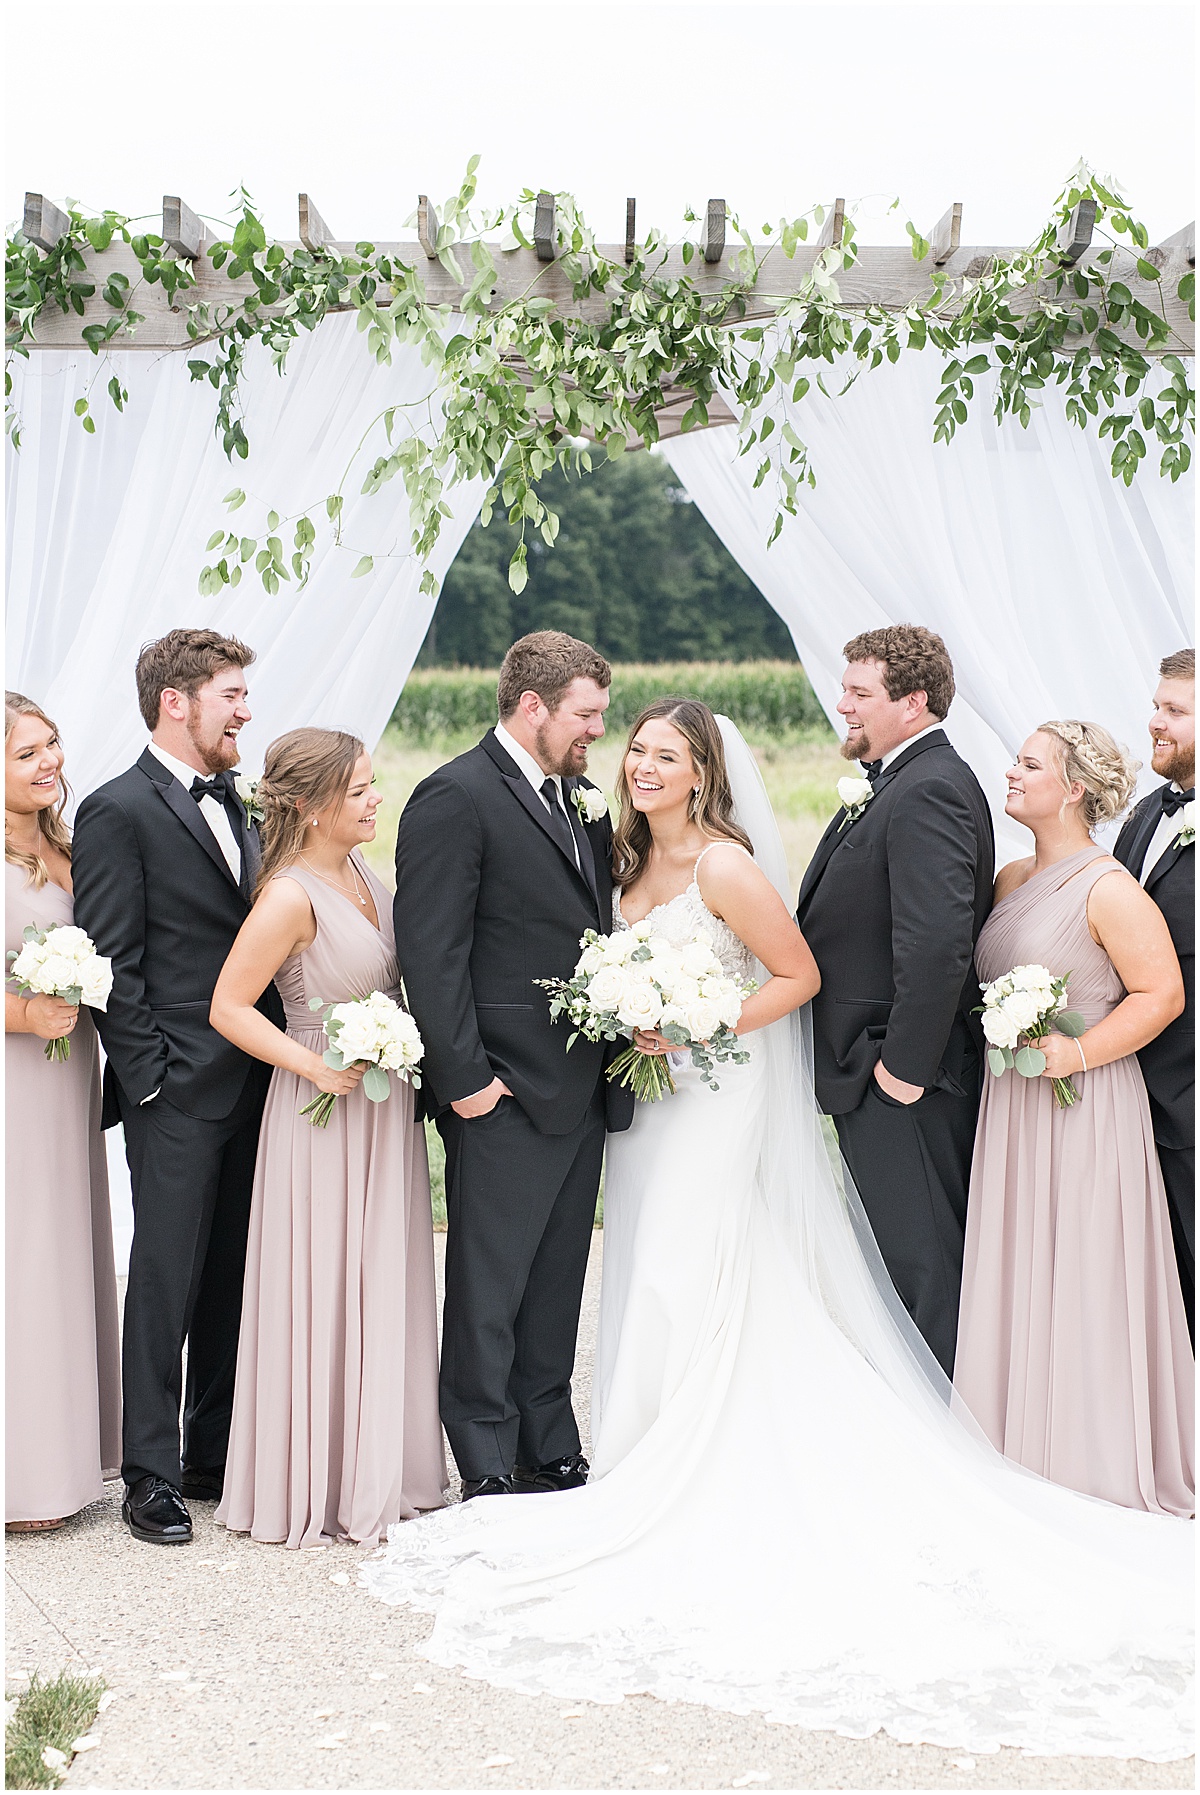 Mr. & Mrs. Nick Peterson: A Wedding in Rensselaer, Indiana